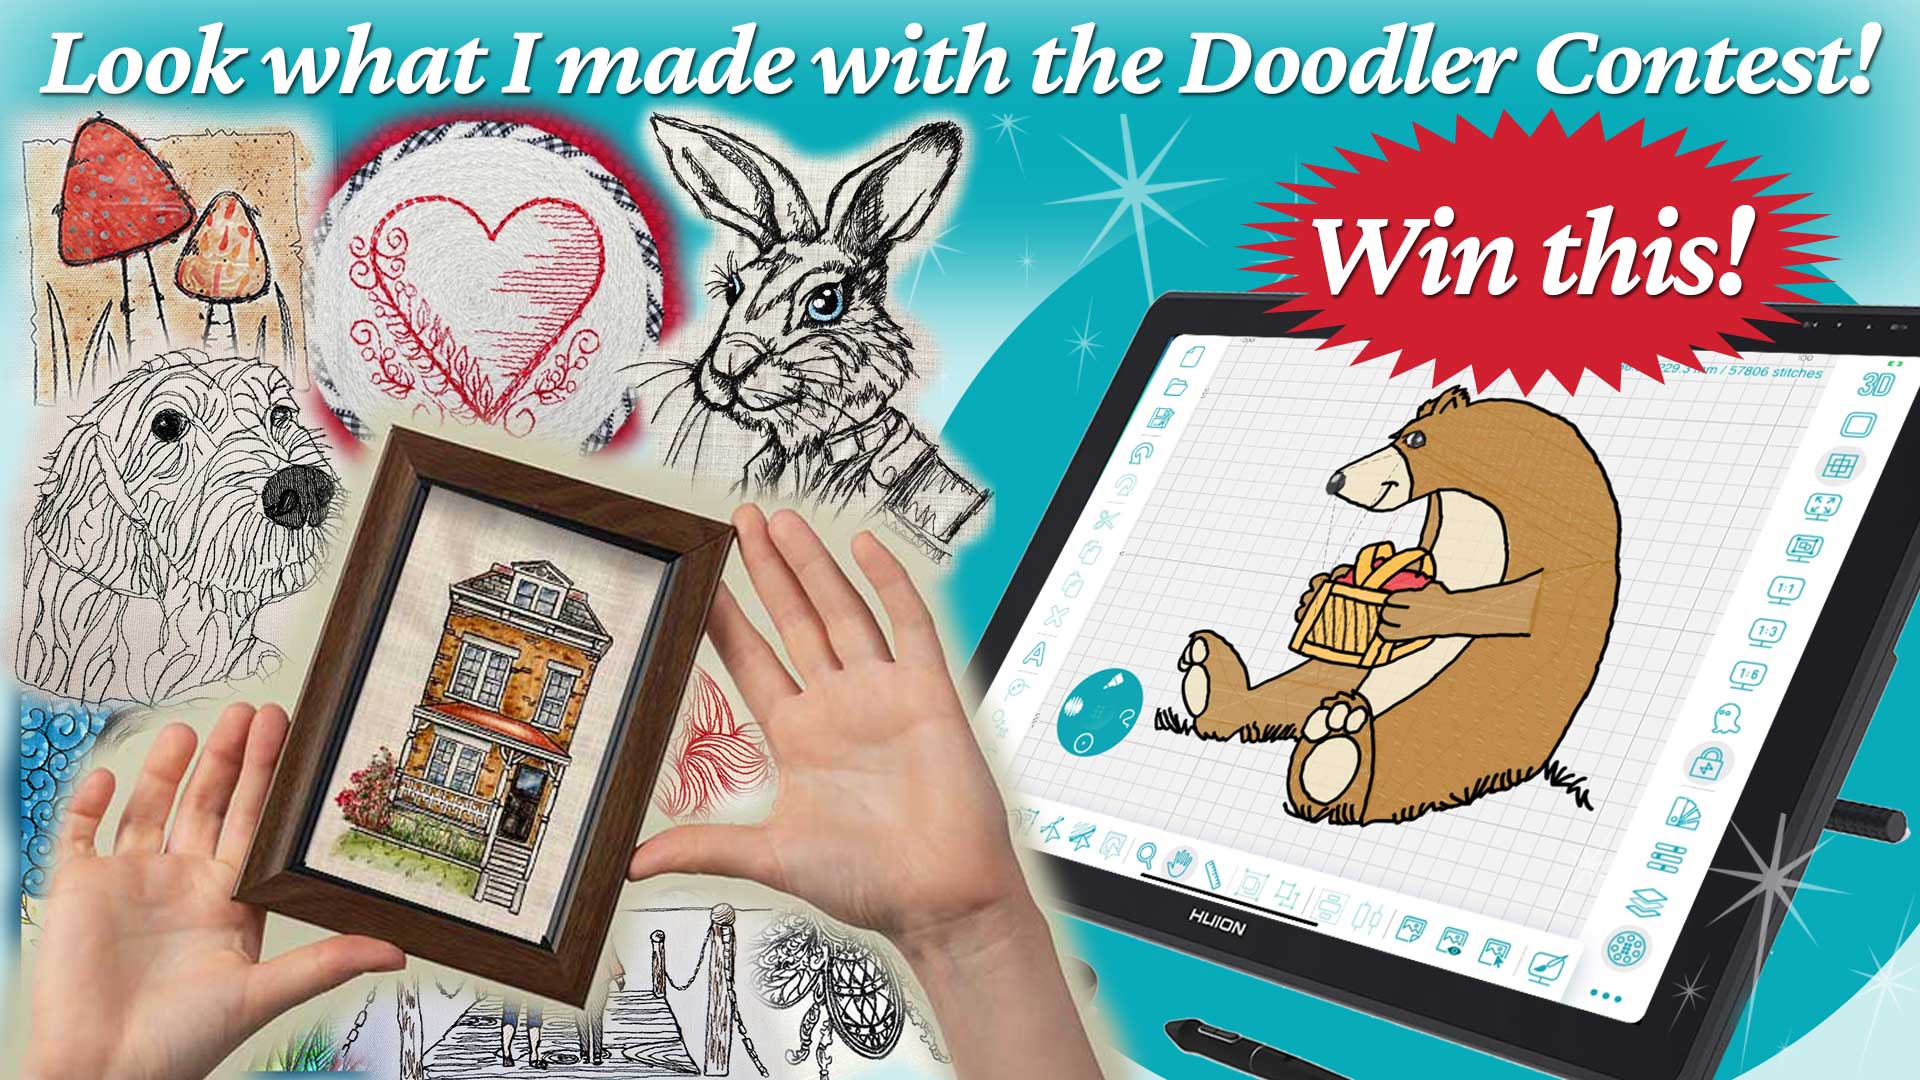 Doodler Contest Win Image2